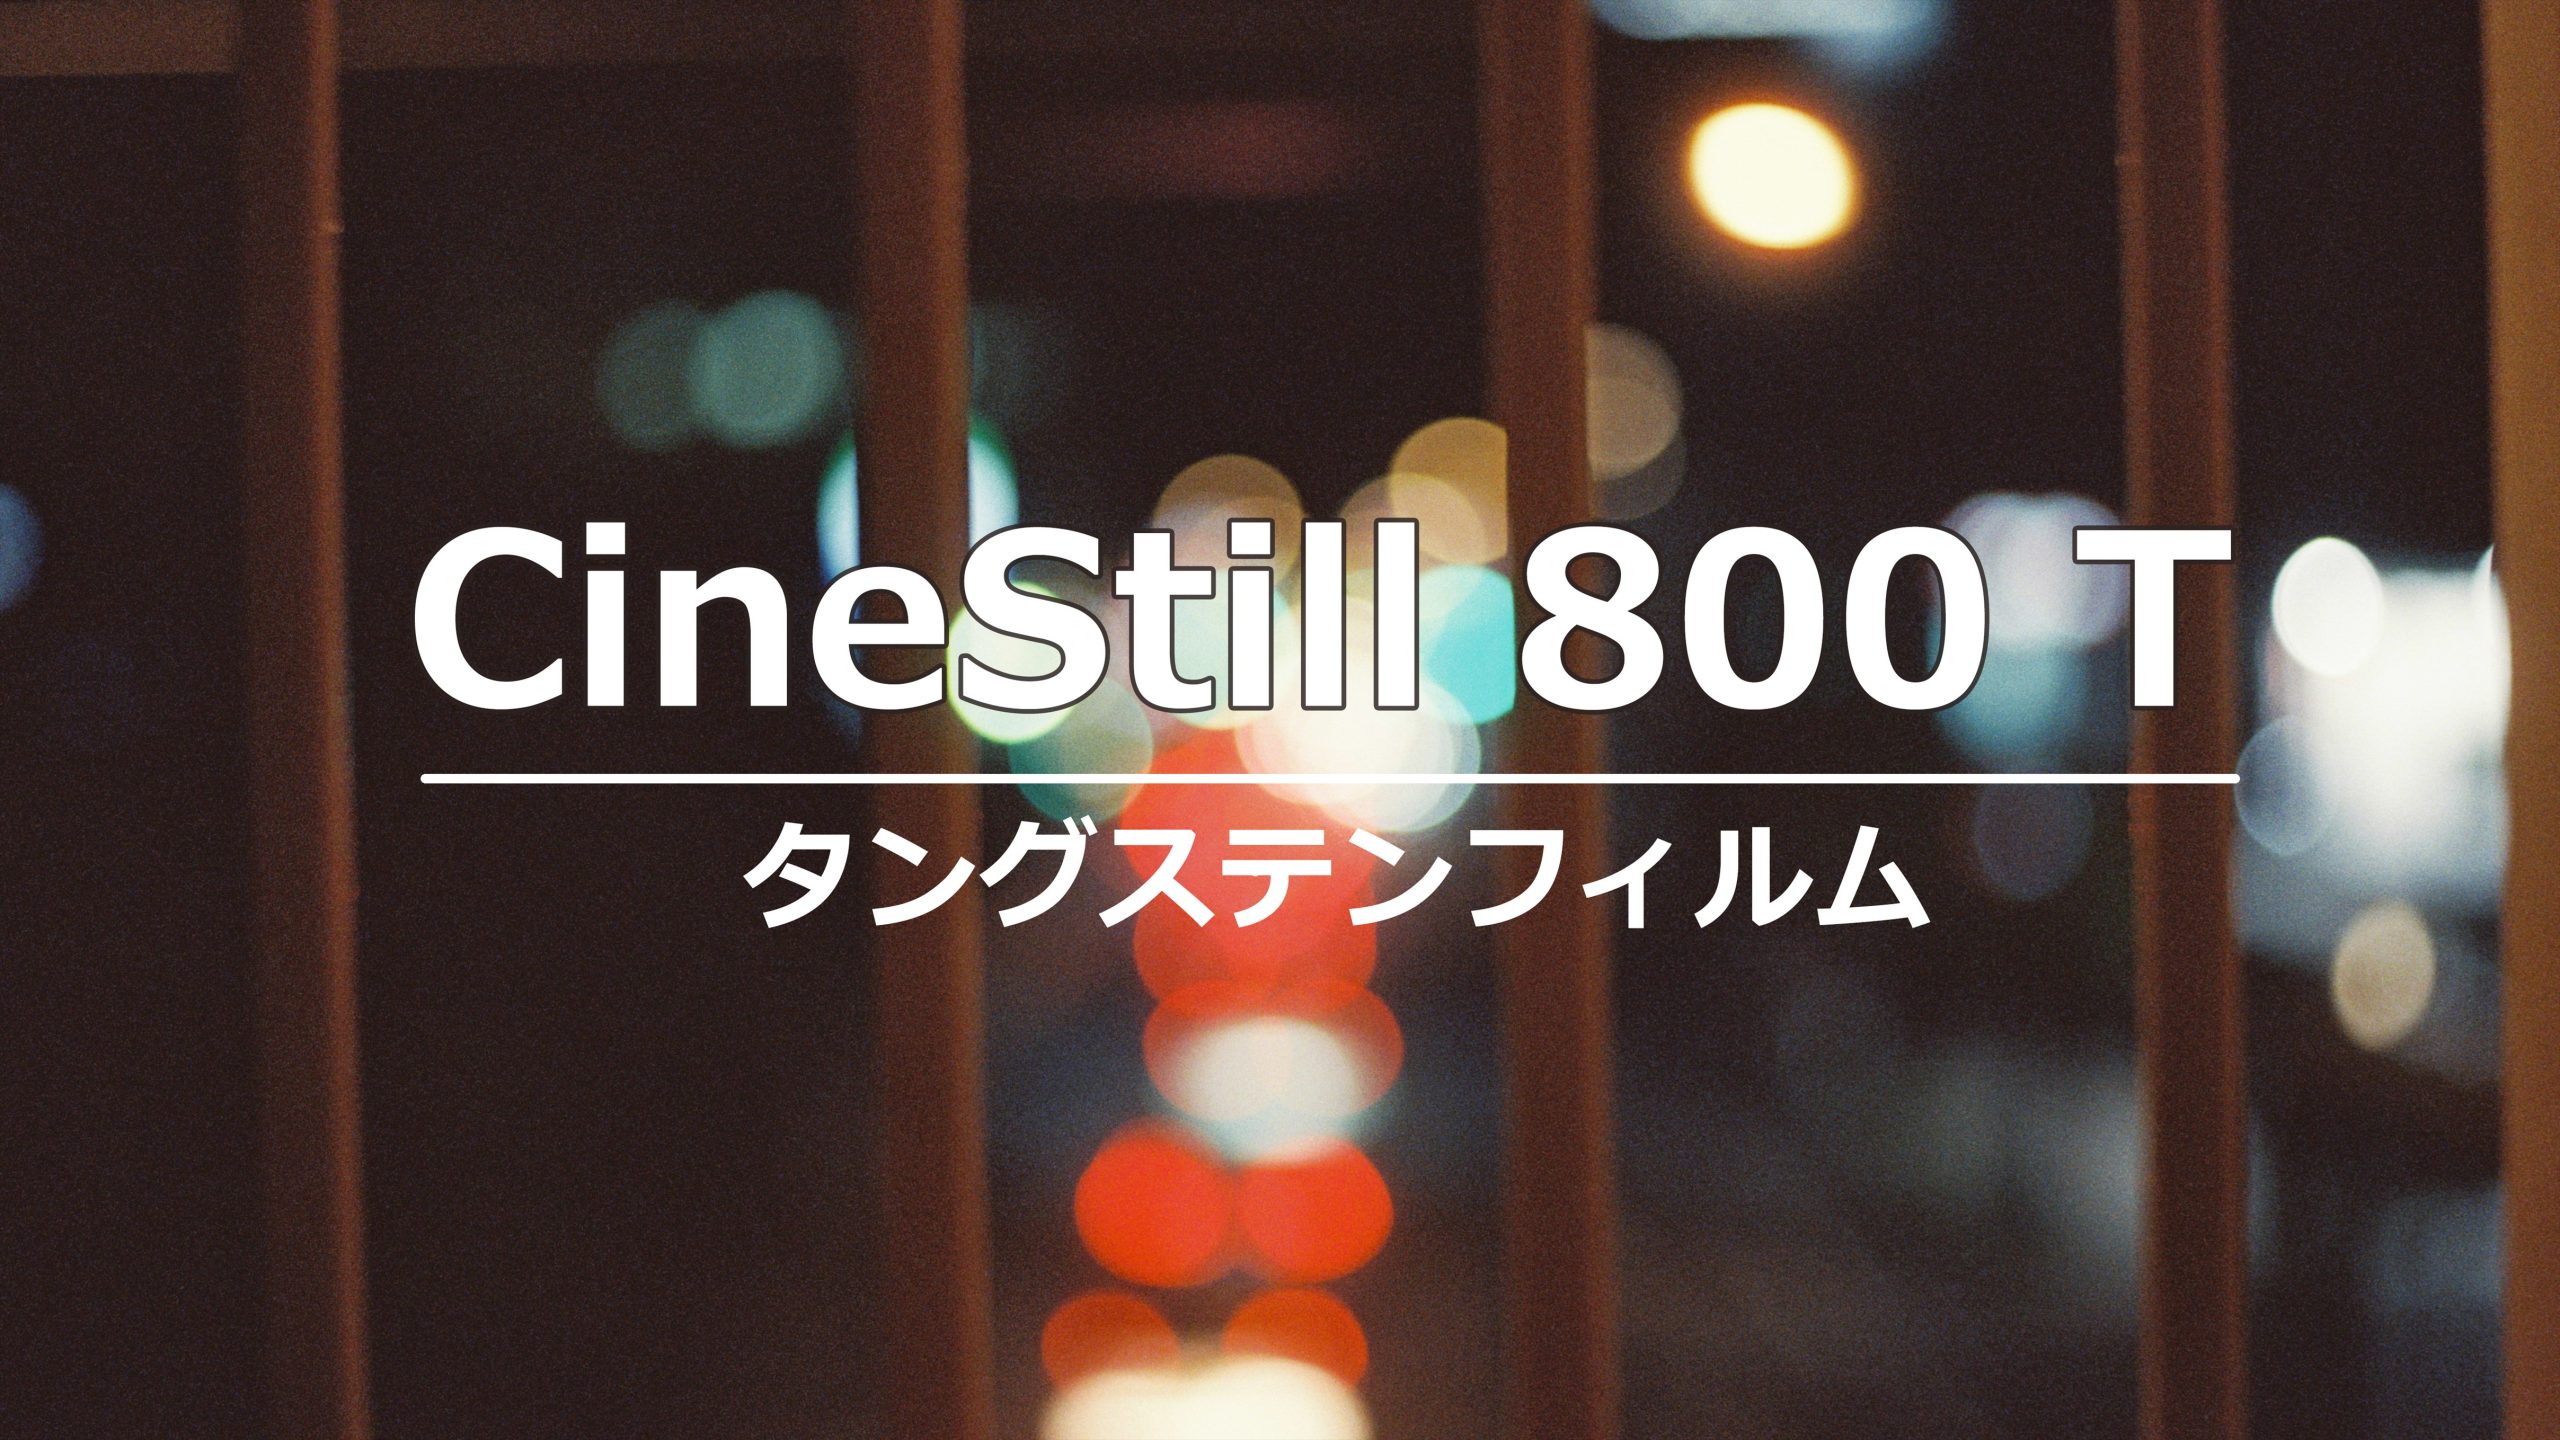 【CineStill 800 T】映画に出てくるような、淡く幻想的に撮りたい